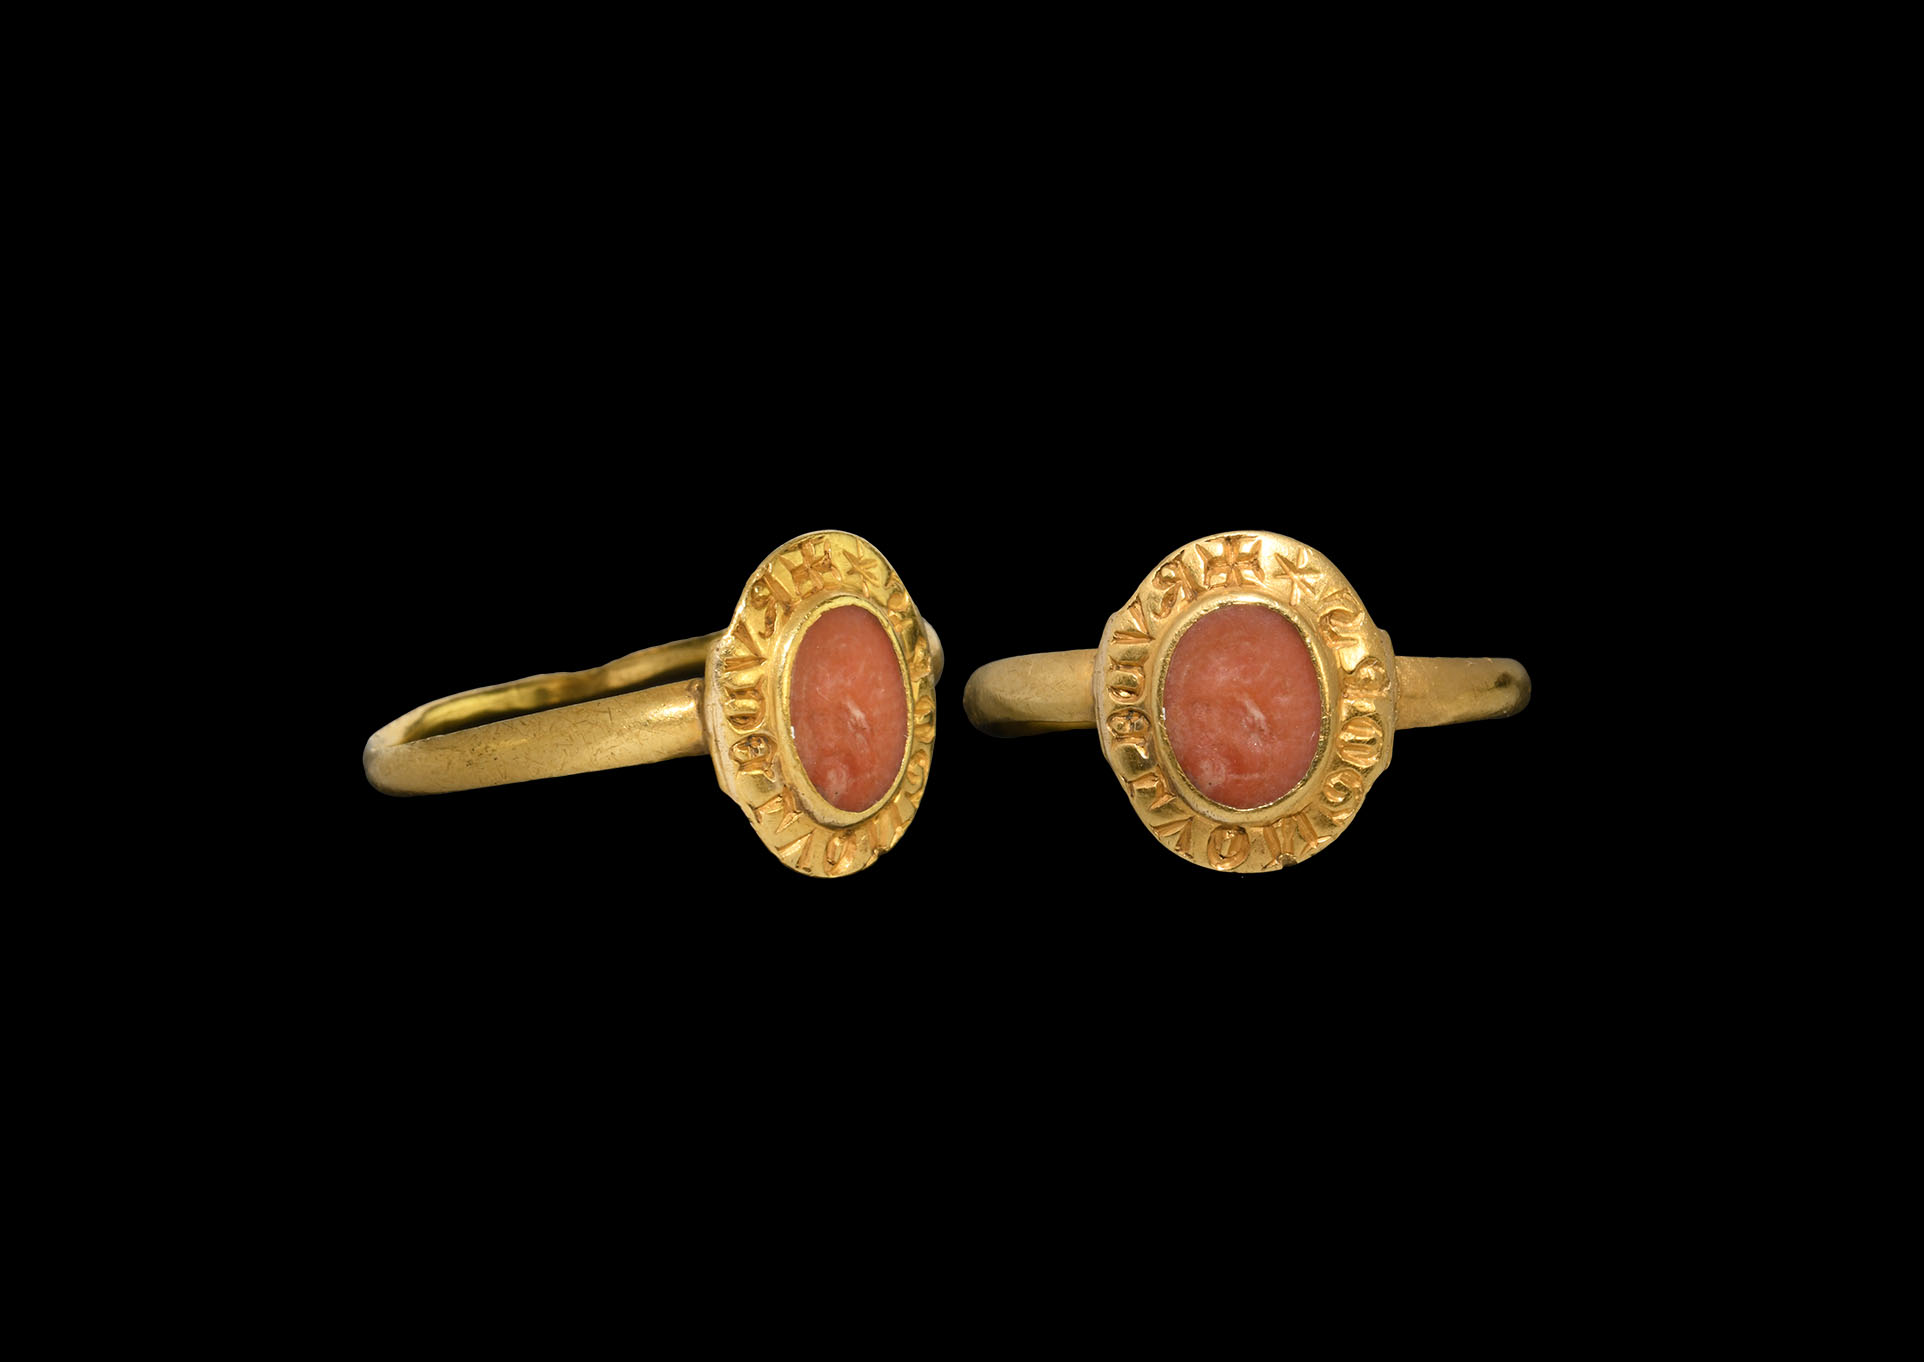 Medieval Crusader's Gold 'Geoffrey Rudel de Blaye' Personal Seal Ring